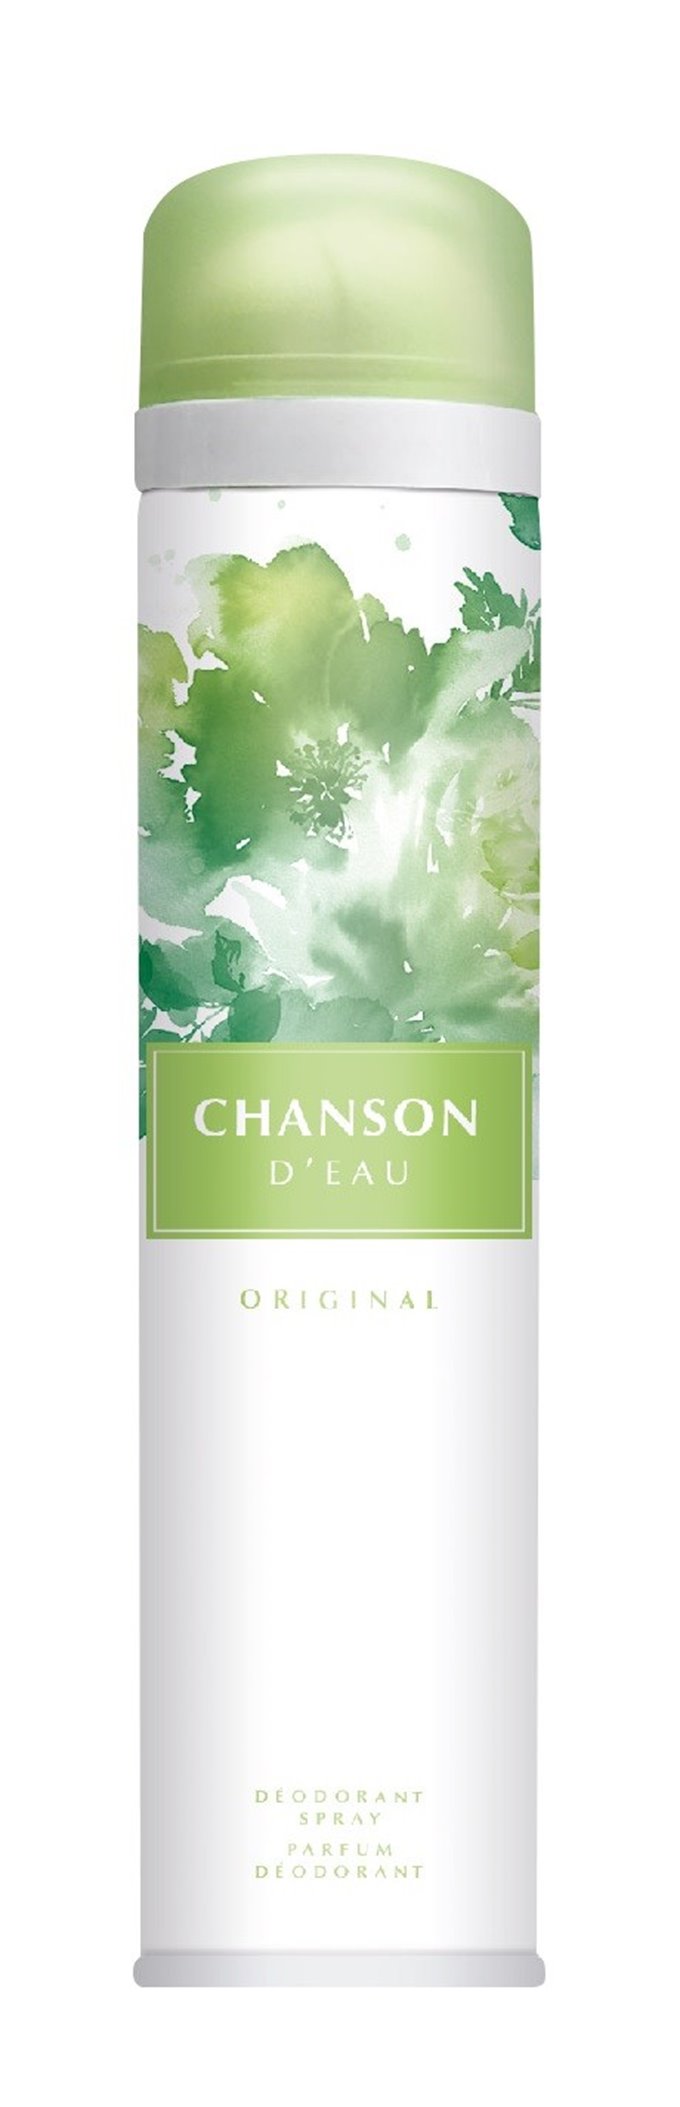 Chanson D'Eau Original Dezodorant spray  200ml